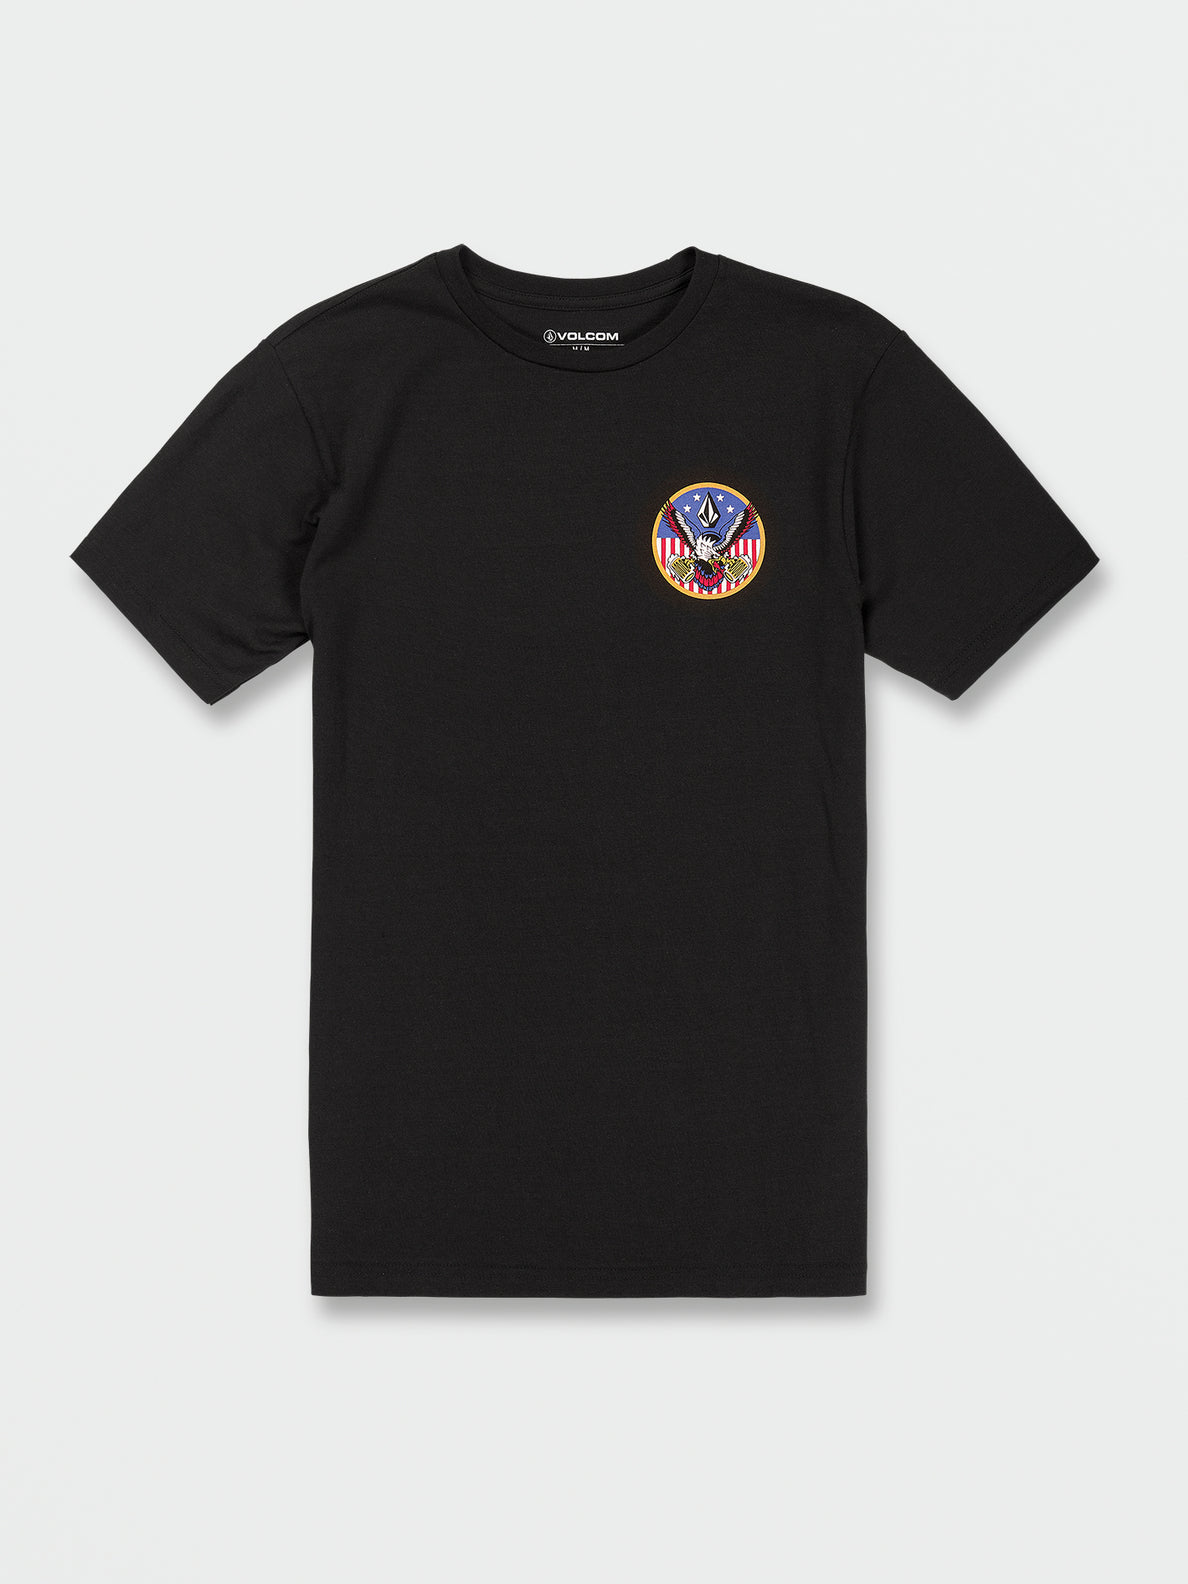 Freedomeagle Short Sleeve Tee Shirt - Black